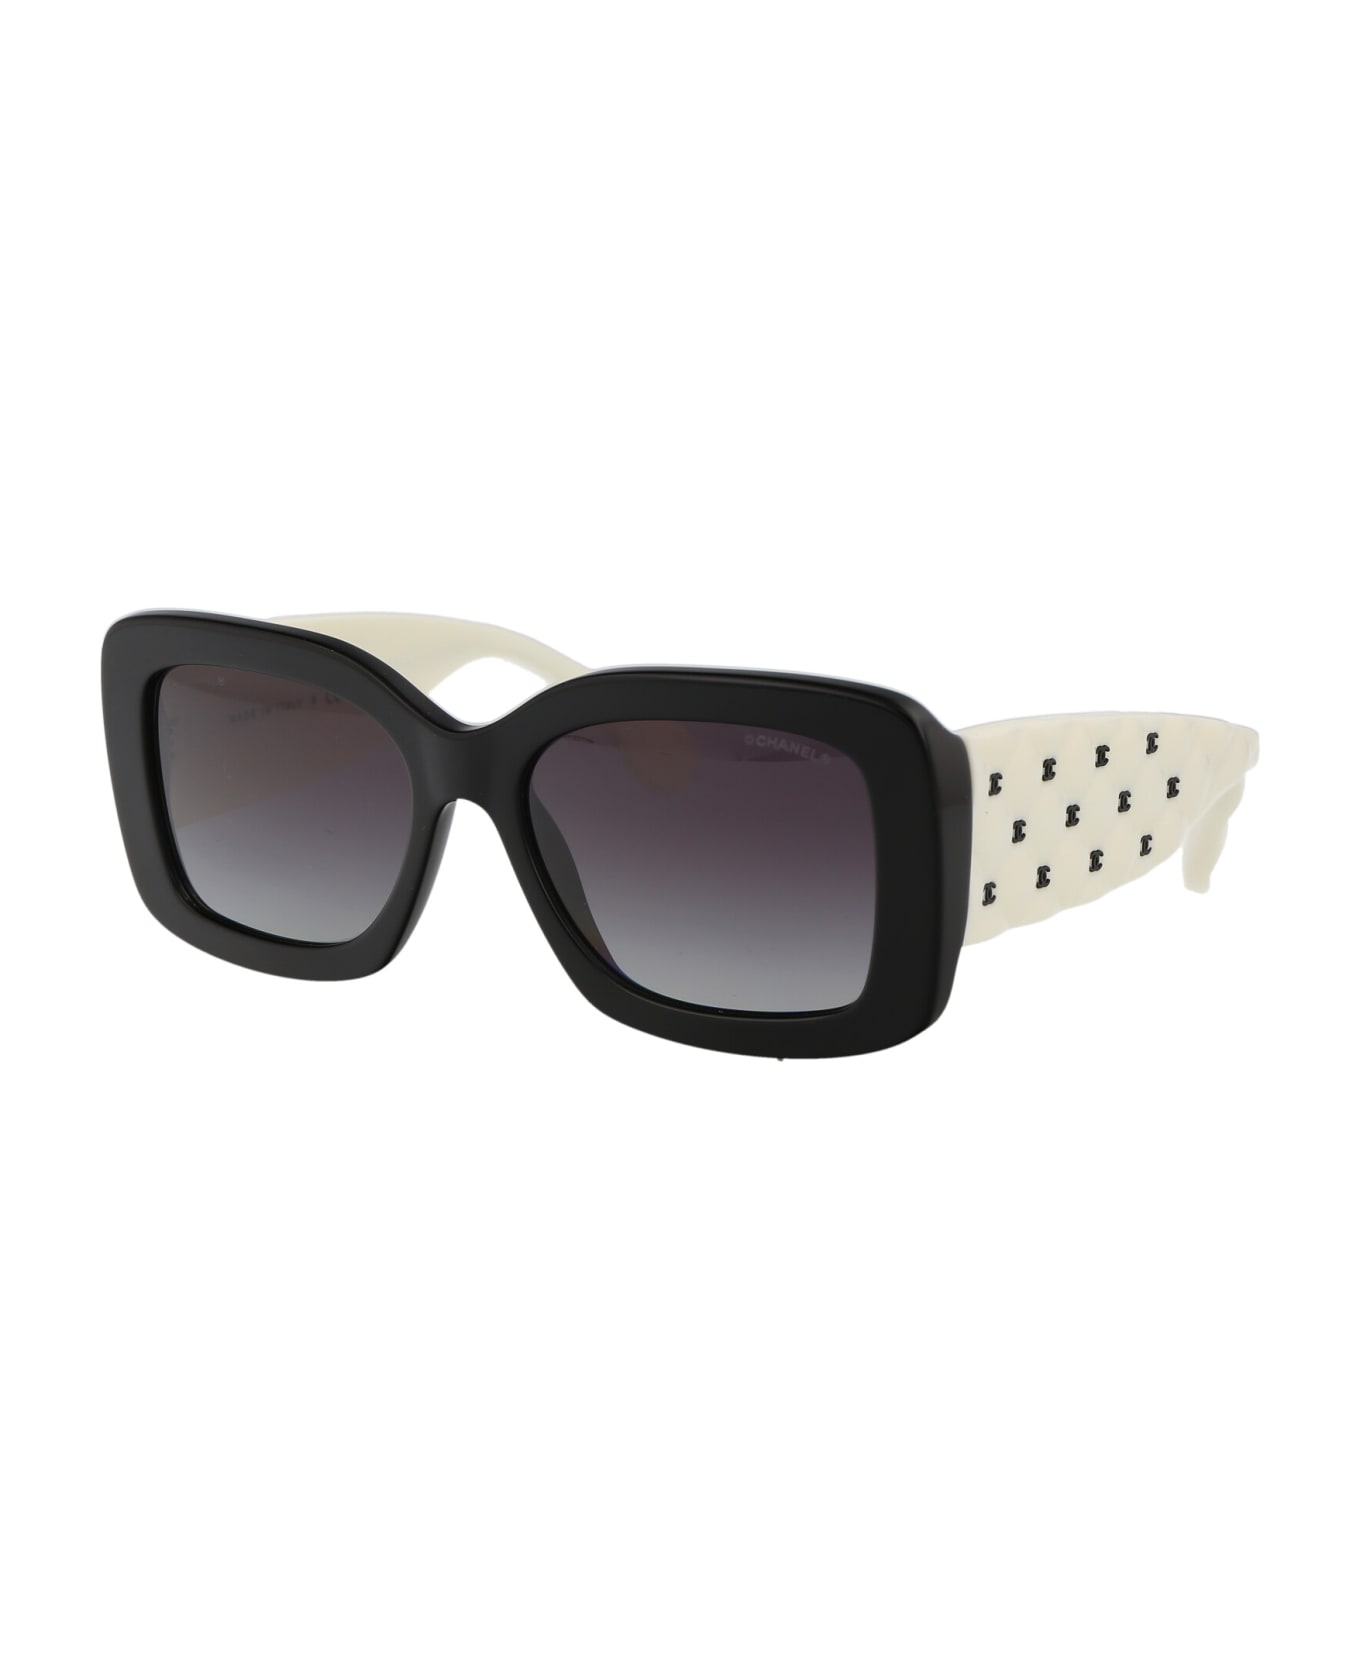 Chanel 0ch5483 Indiana Sunglasses - 1656S6 WHITE